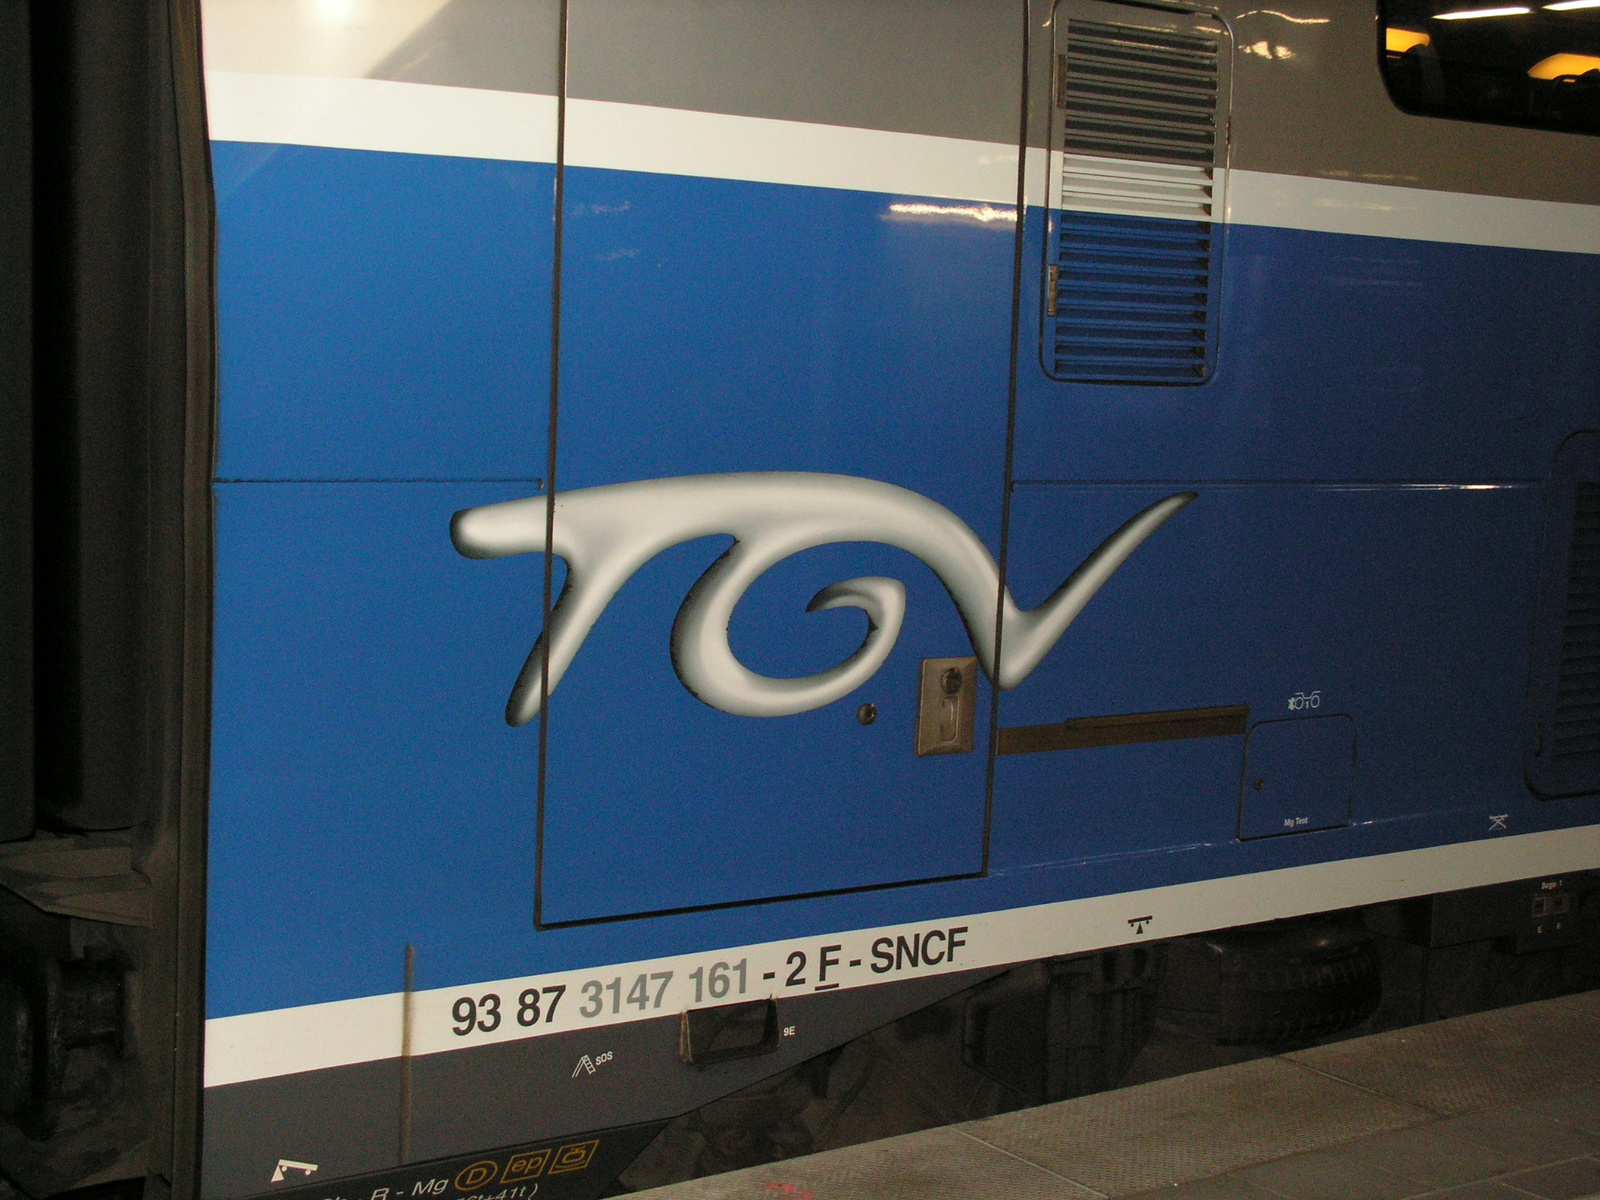 F-SNCF 93 87 3147 161-2, SzG3